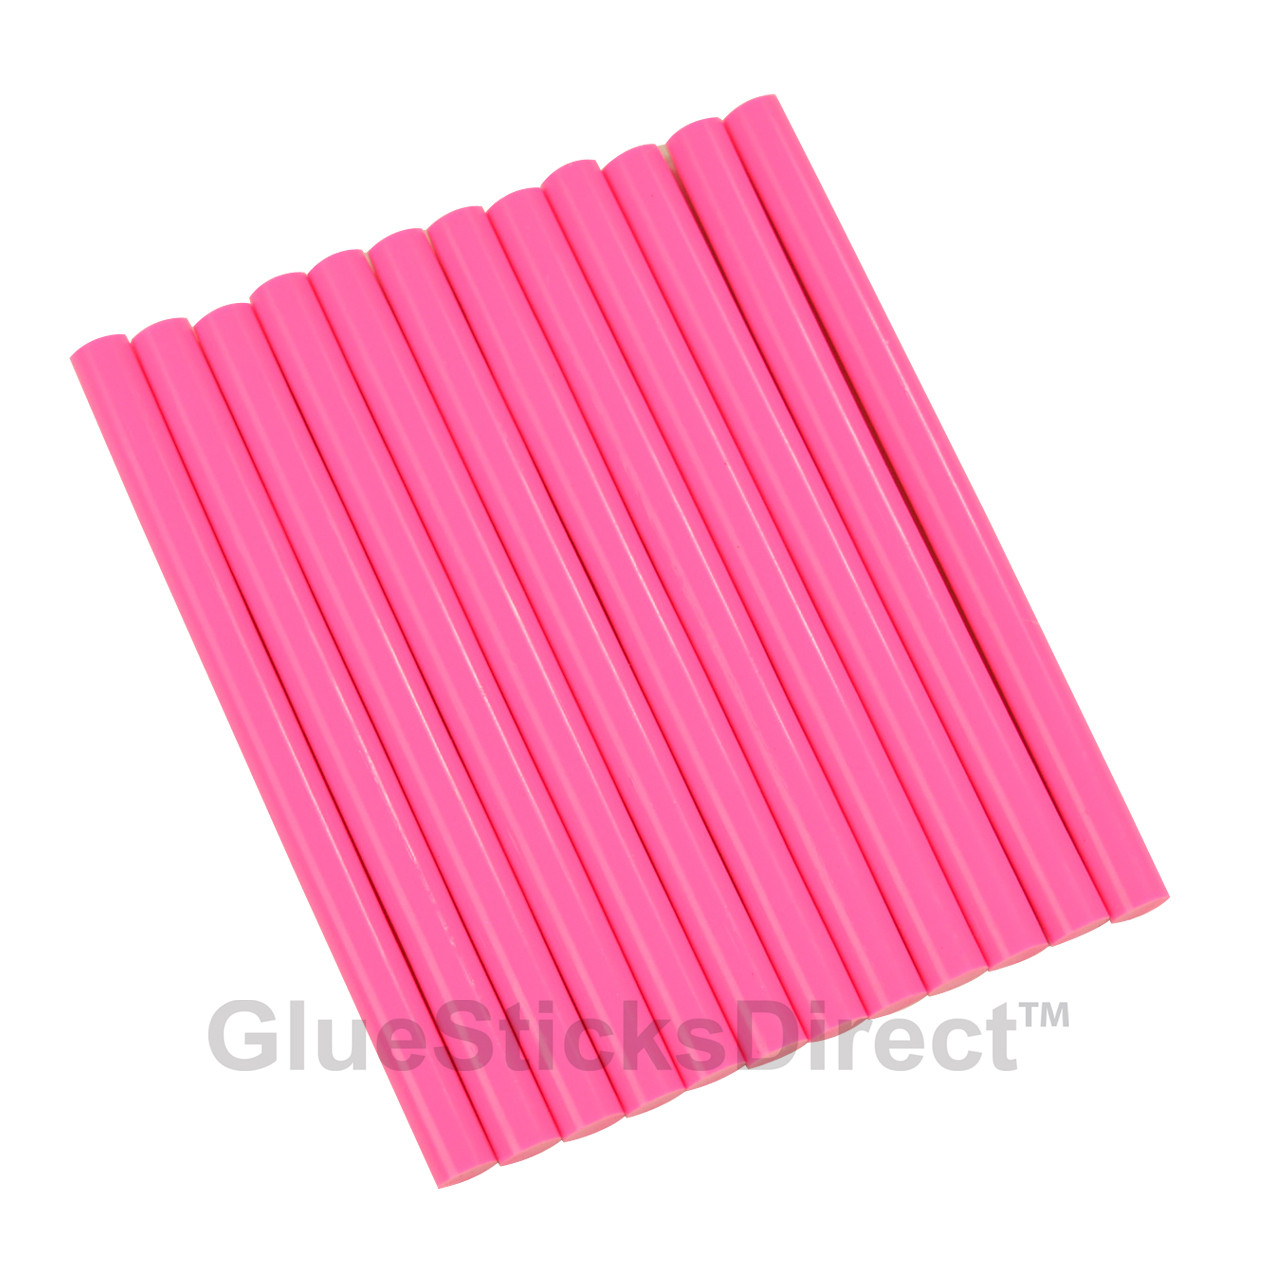 GlueSticksDirect Neon Pink Colored Glue Sticks Mini X 4 24 Sticks -  GlueSticksDirect